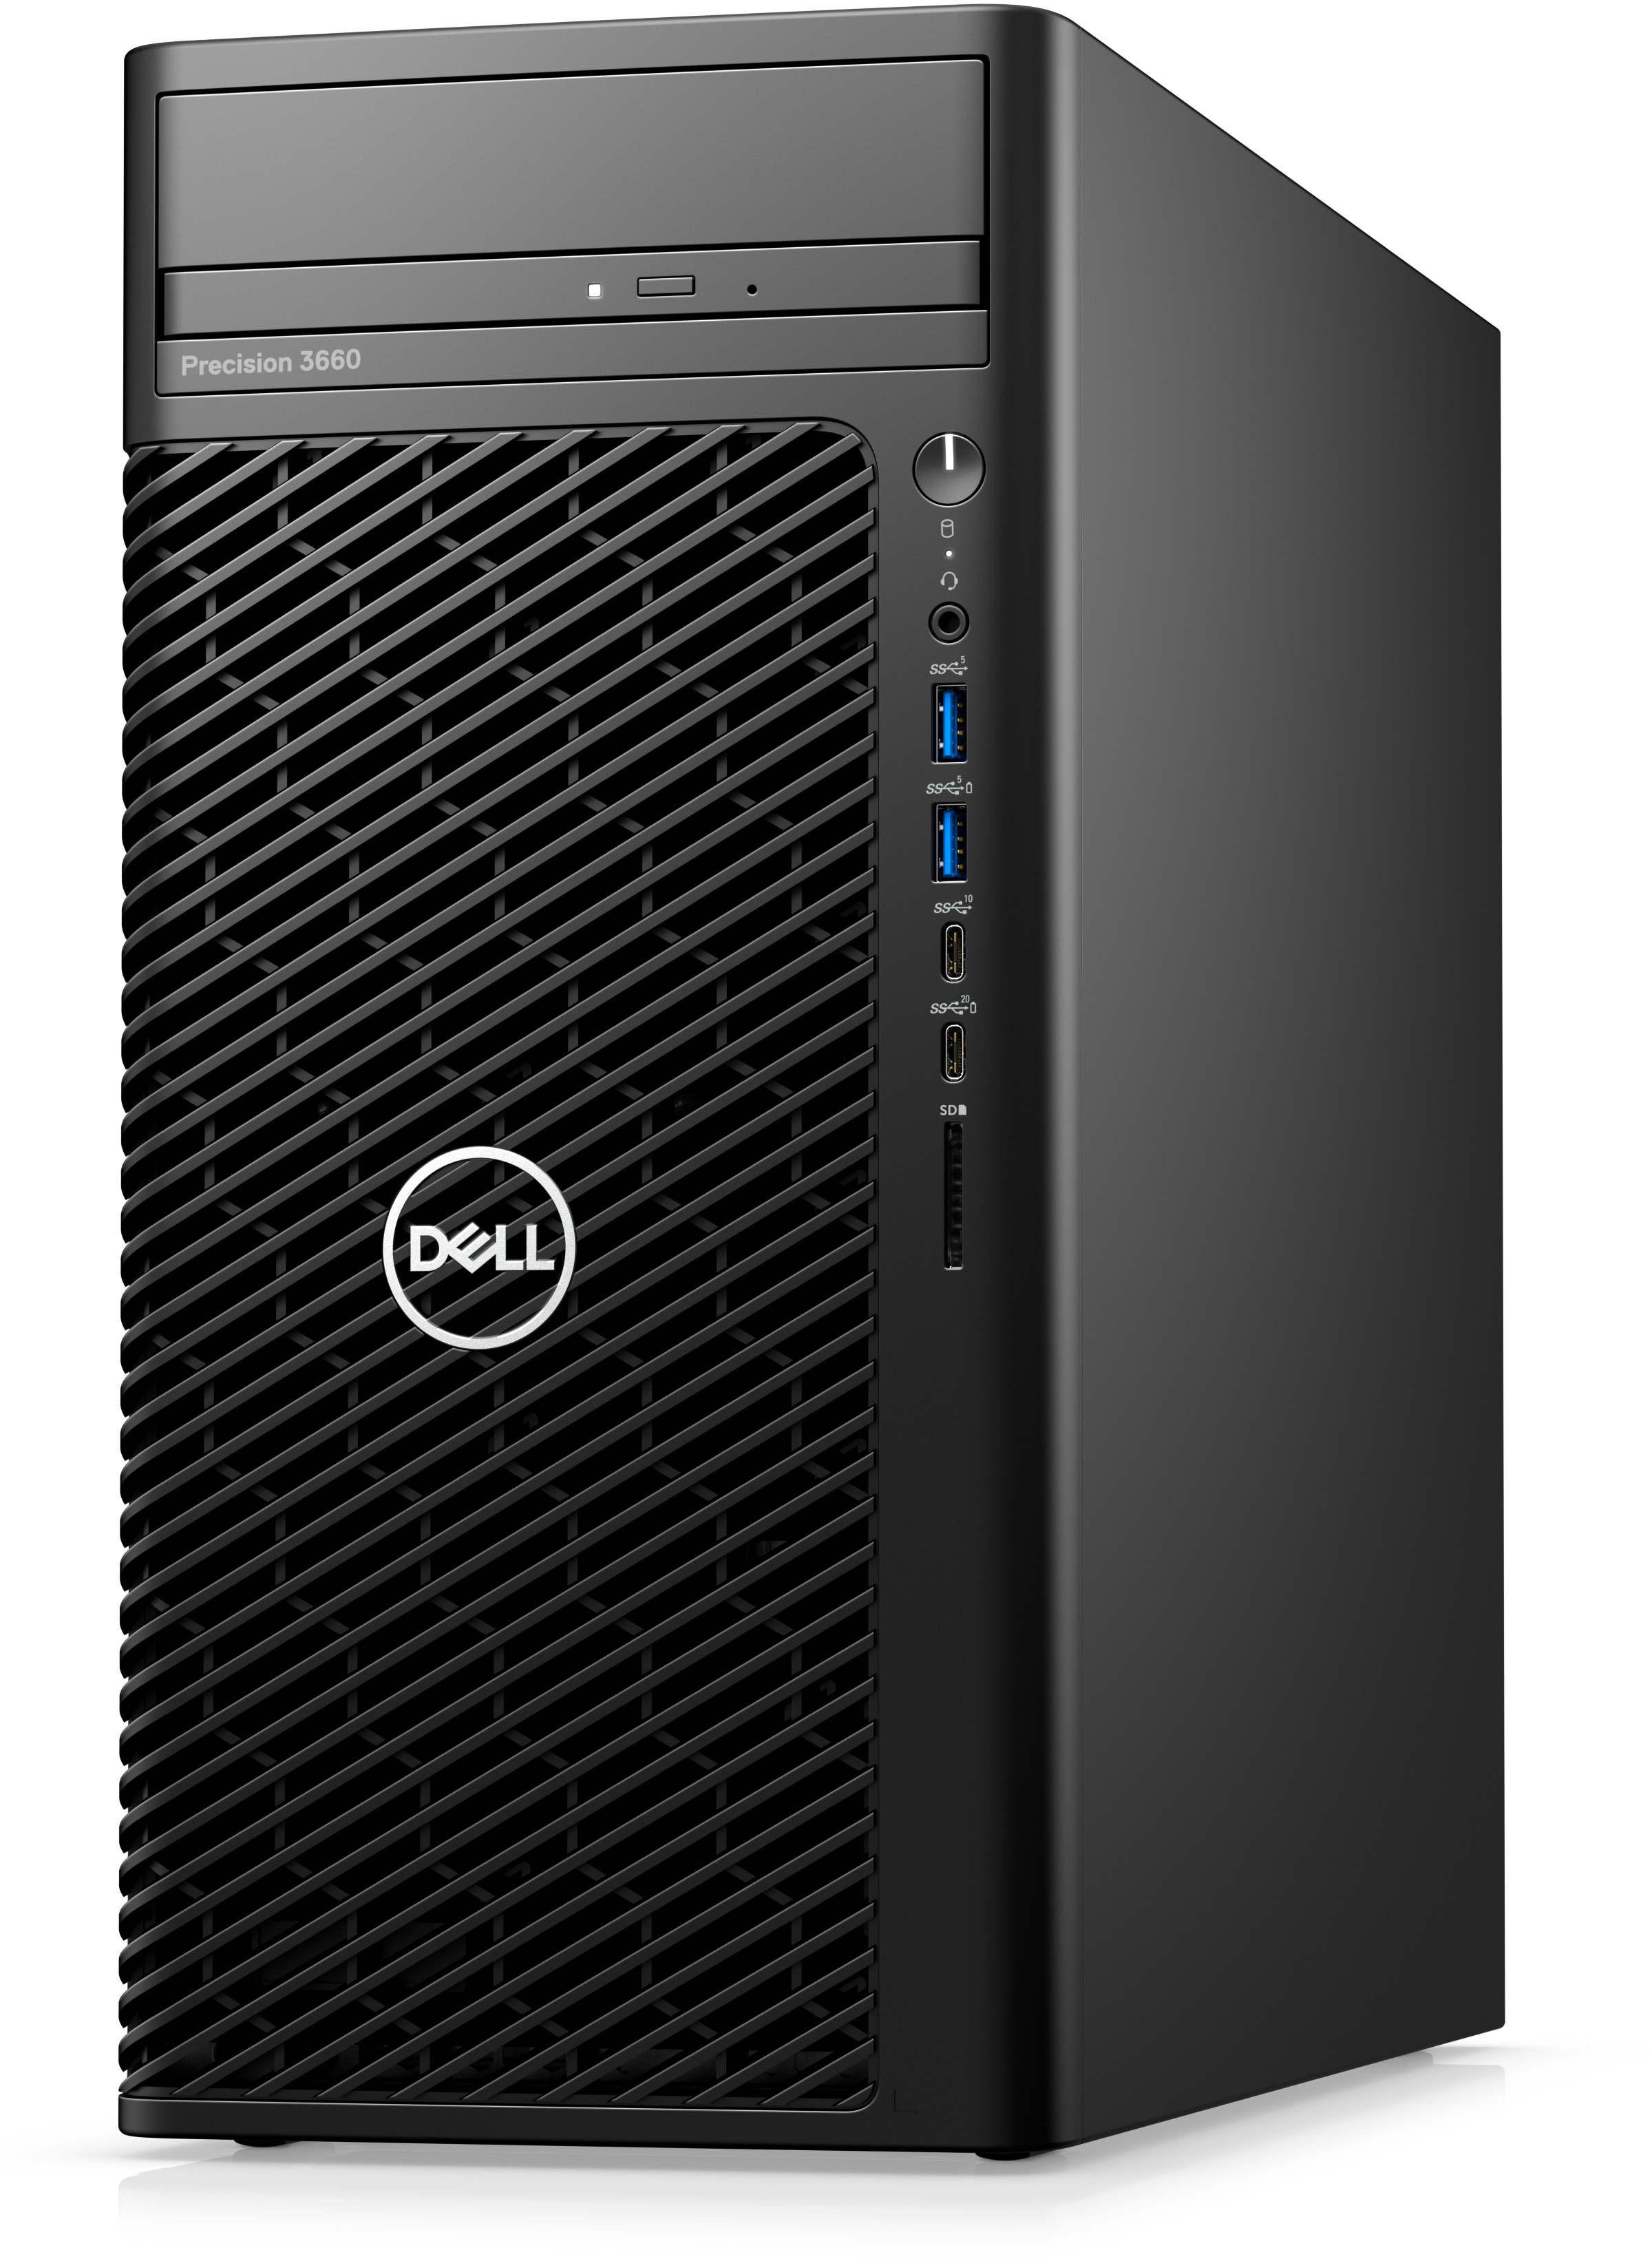 Dell Precision 3660 Tower Workstation, 12th Generation Intel Core i7-12700, 16GB RAM, 512 SSD, No Monitor, DVDRW, 3 Yrs PS, 500W, Ubuntu